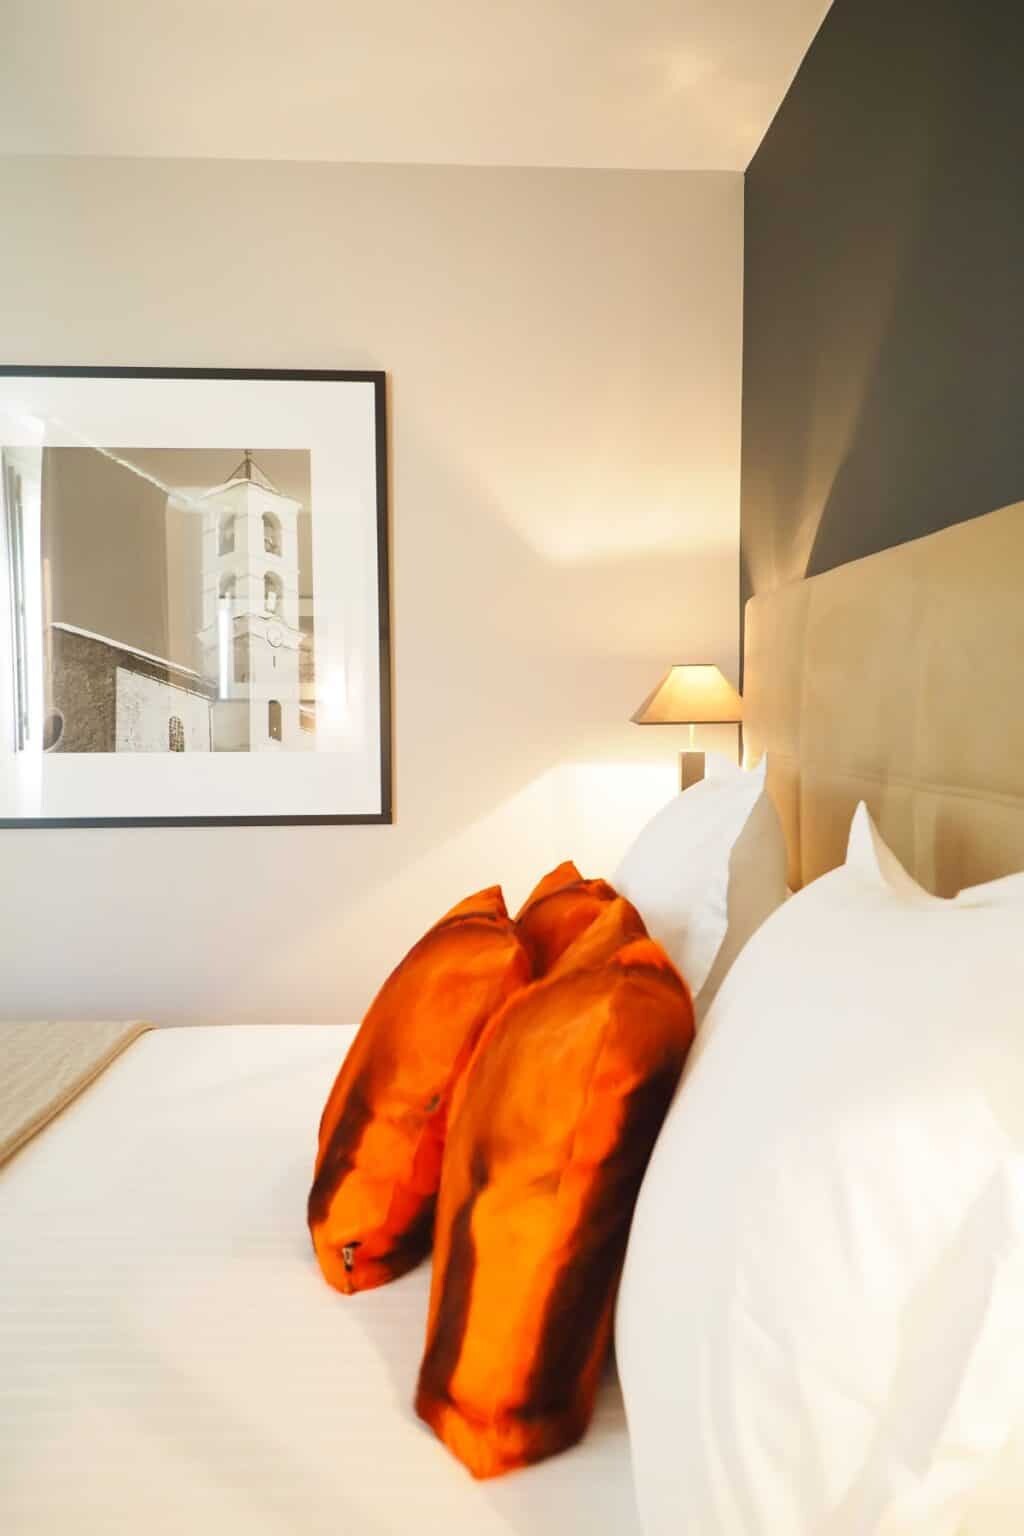 Saint-Veran, France Europe's Highest Village - Hotel Alta Peyra Review